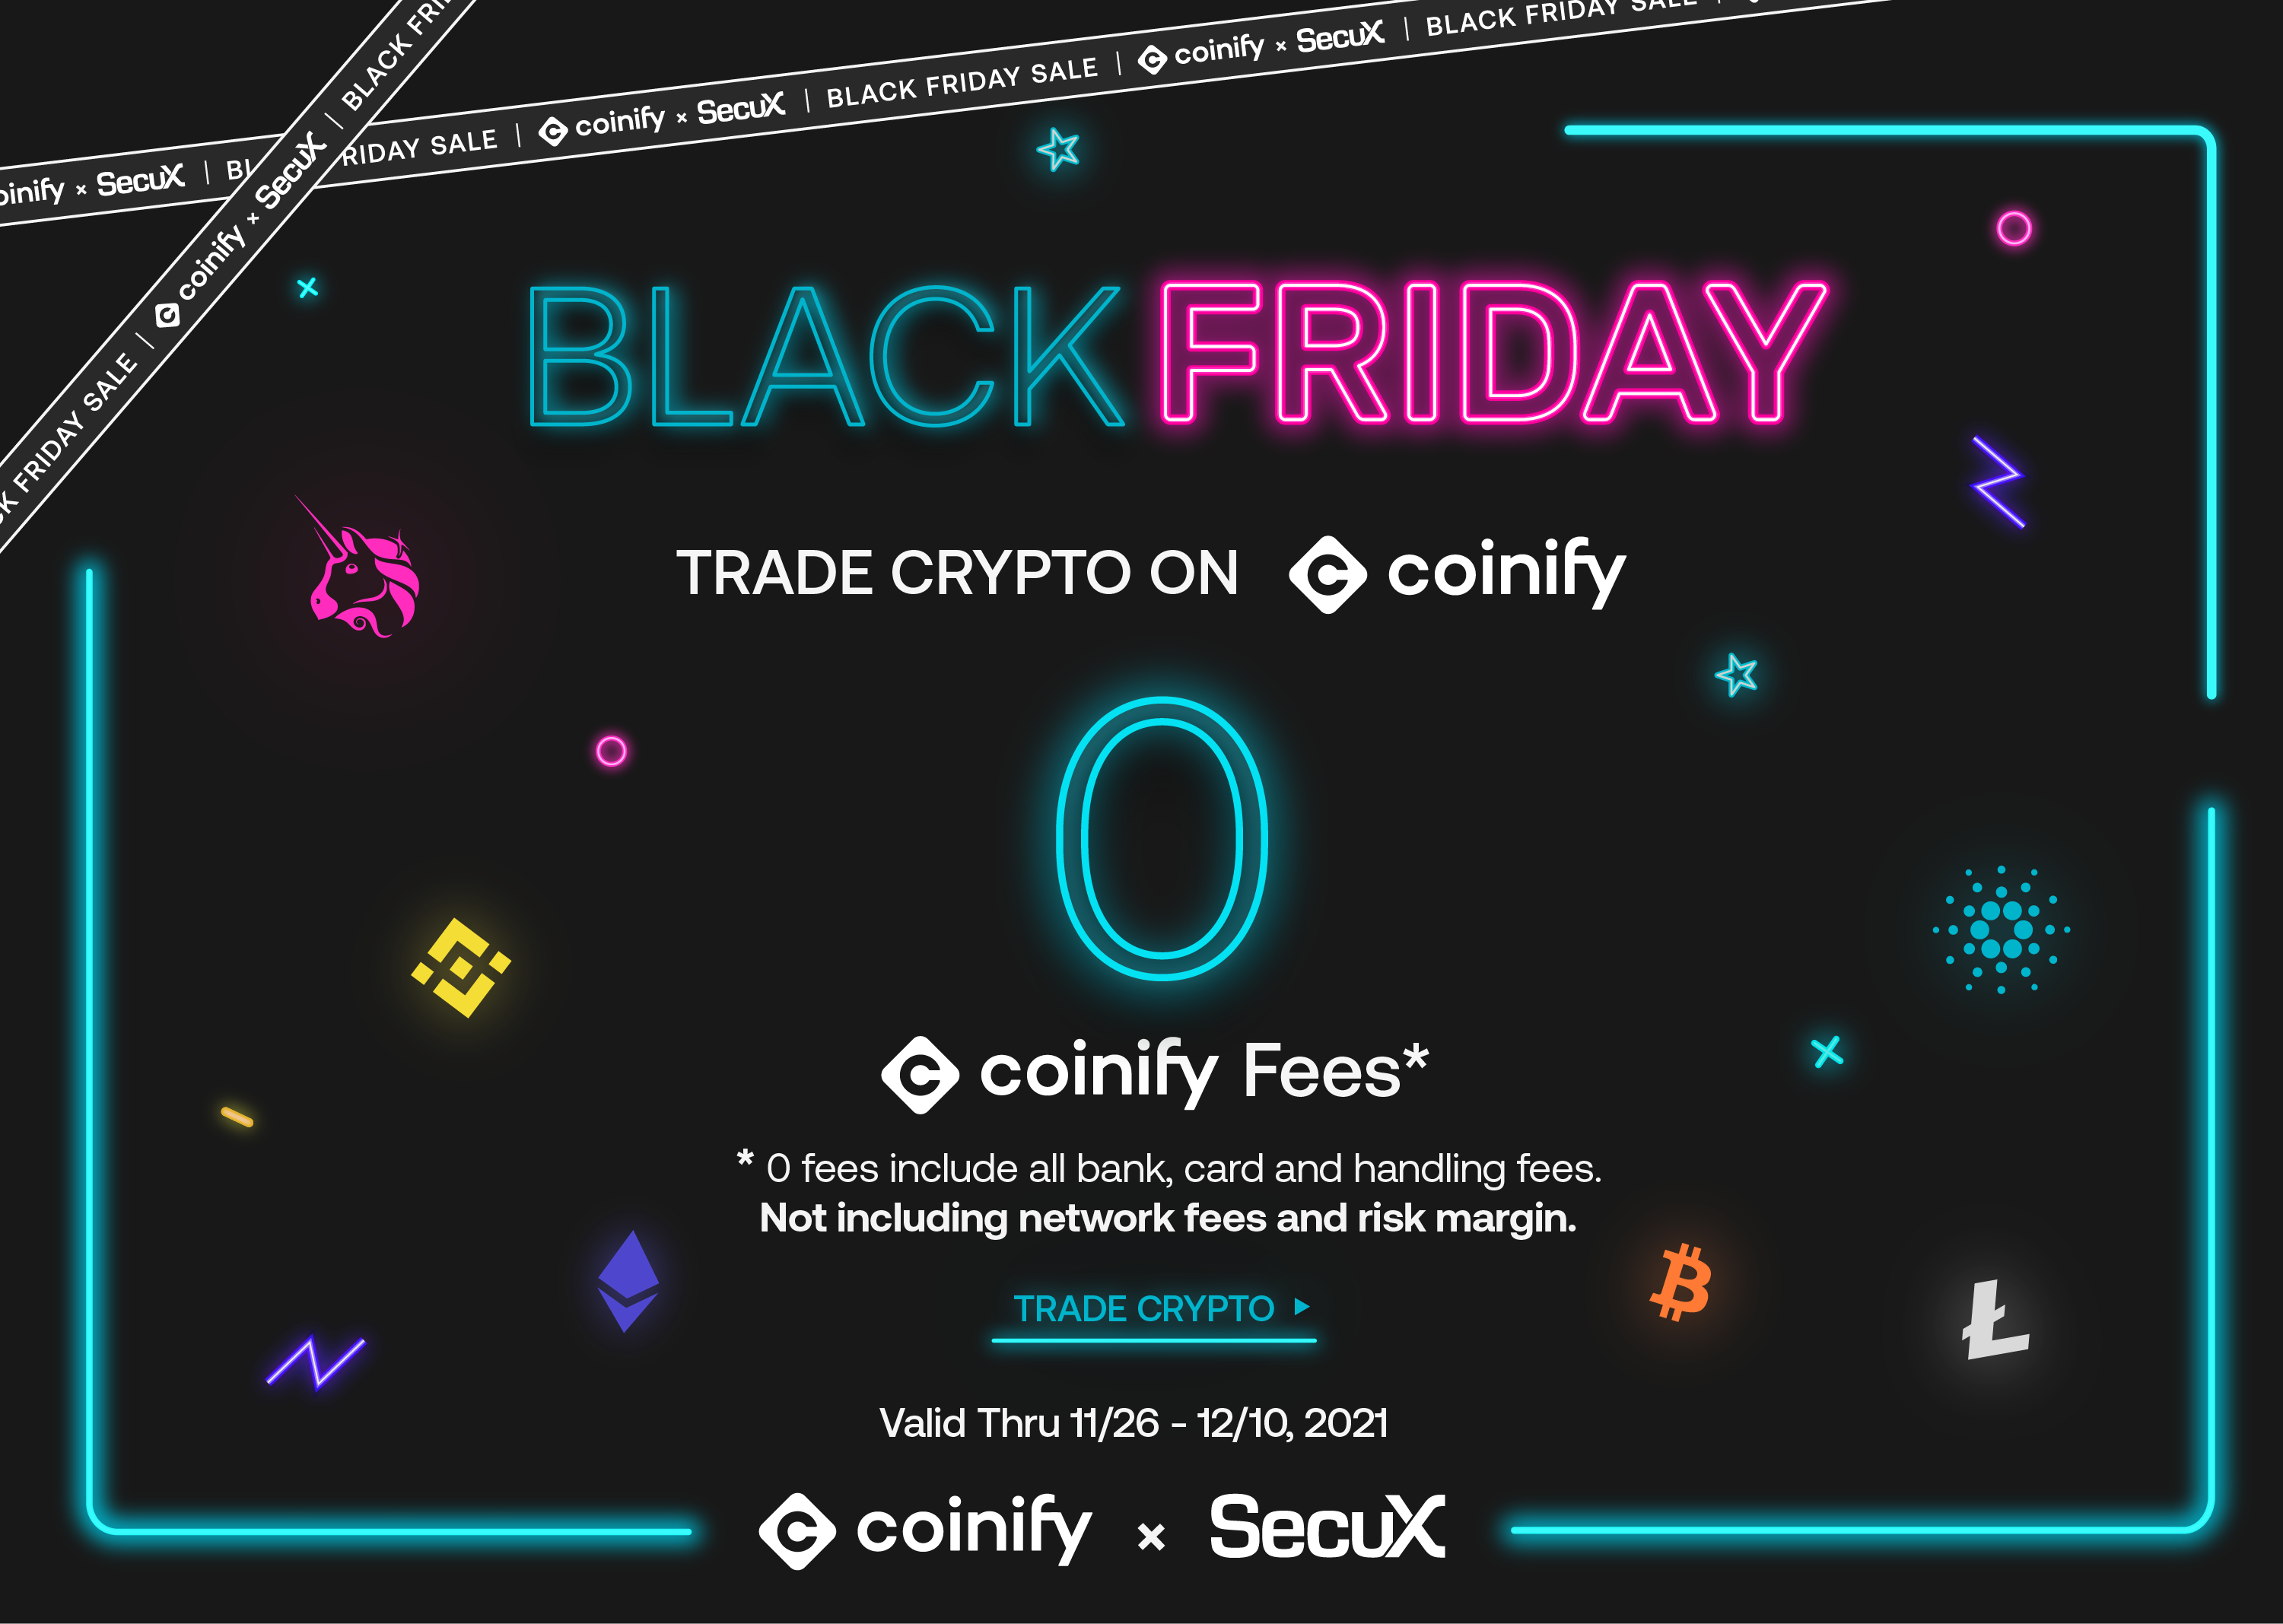 Coinify x SecuX Black Friday 0 Fees